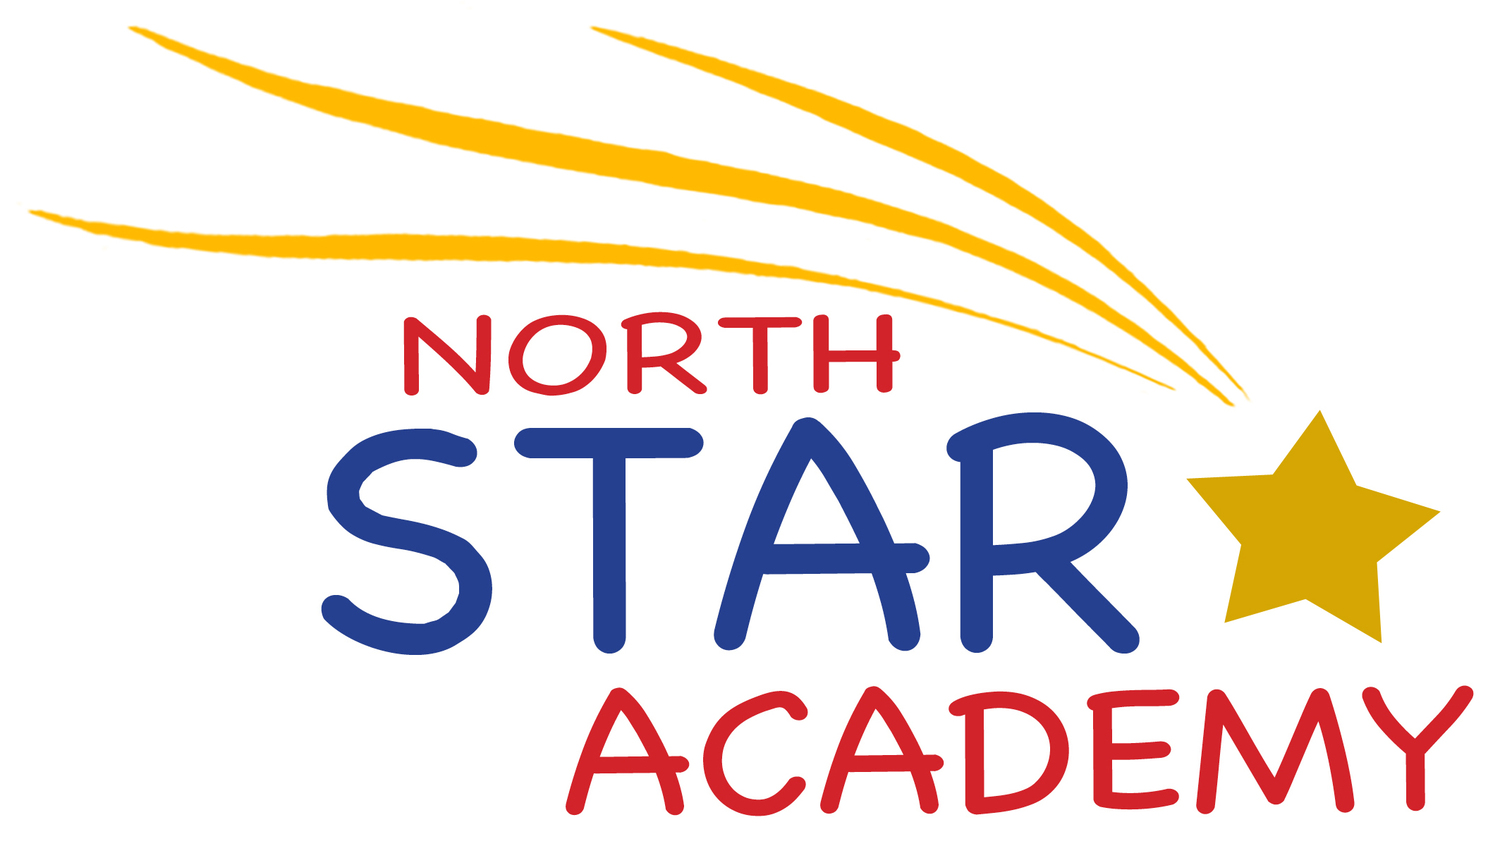 The North Star Academy